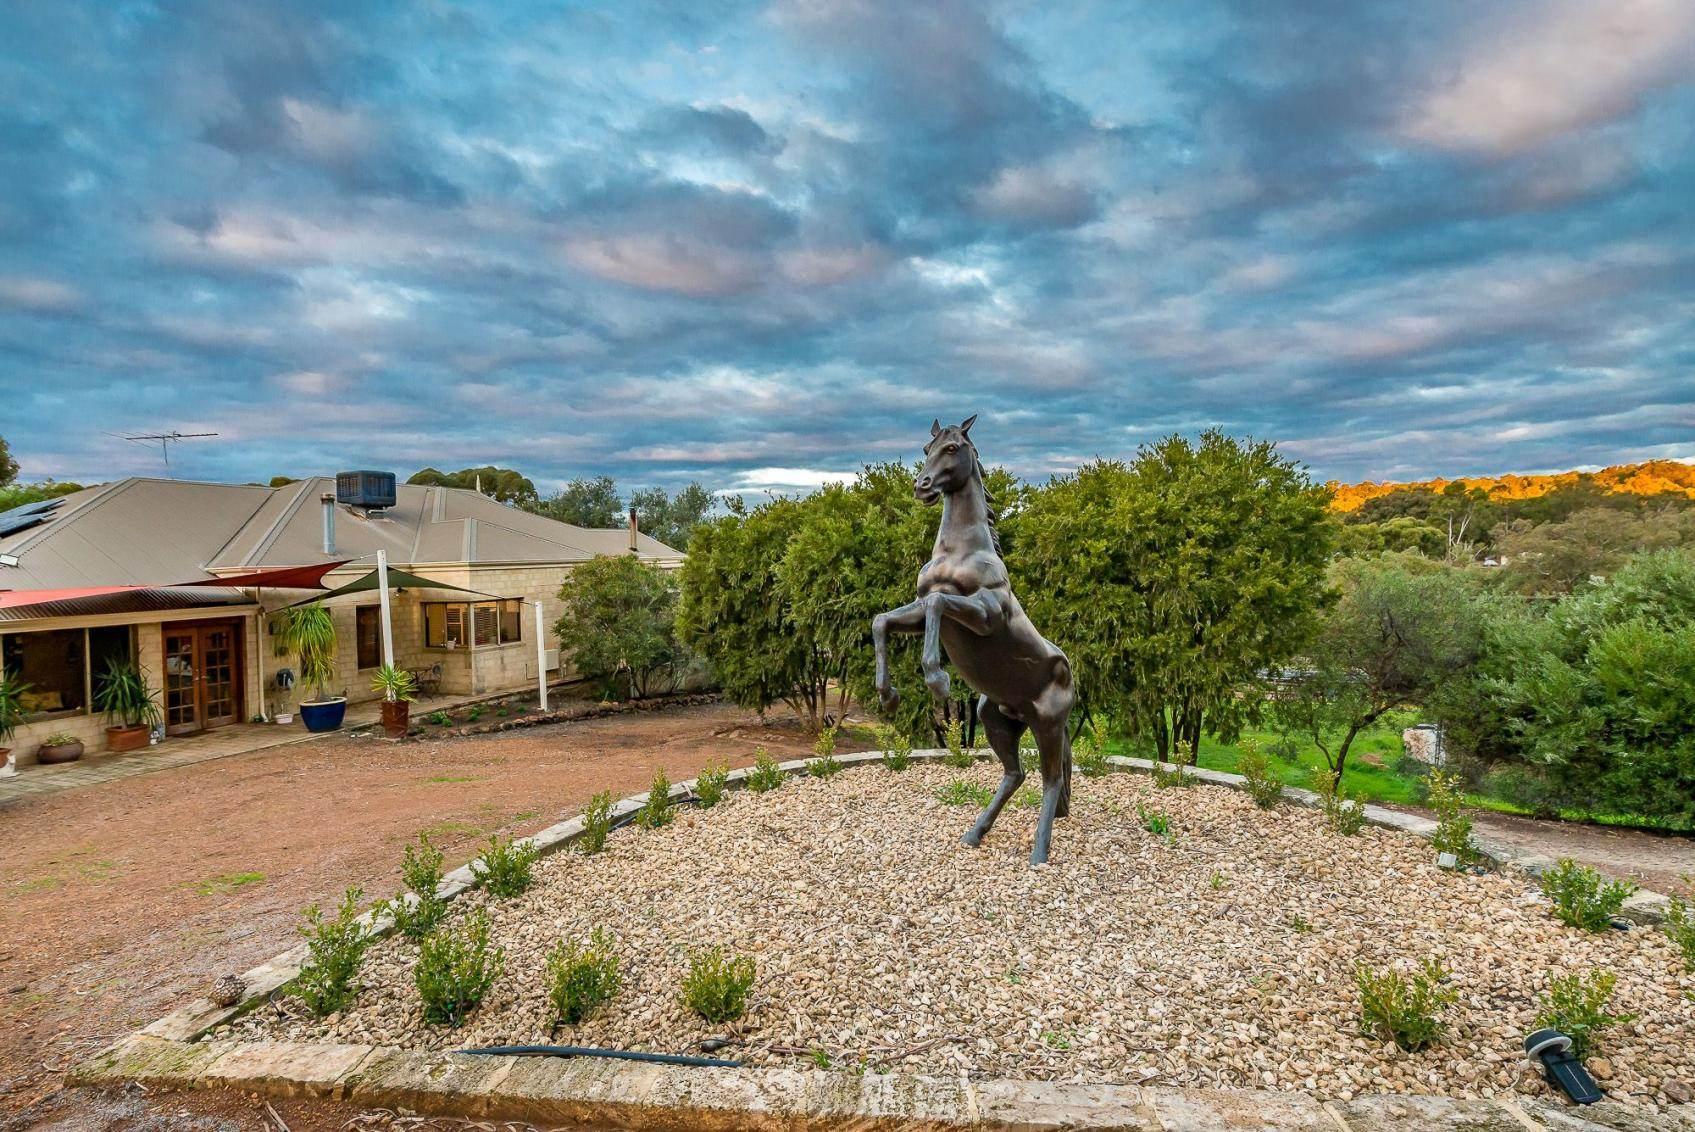 Horse Property For Sale Perth WA